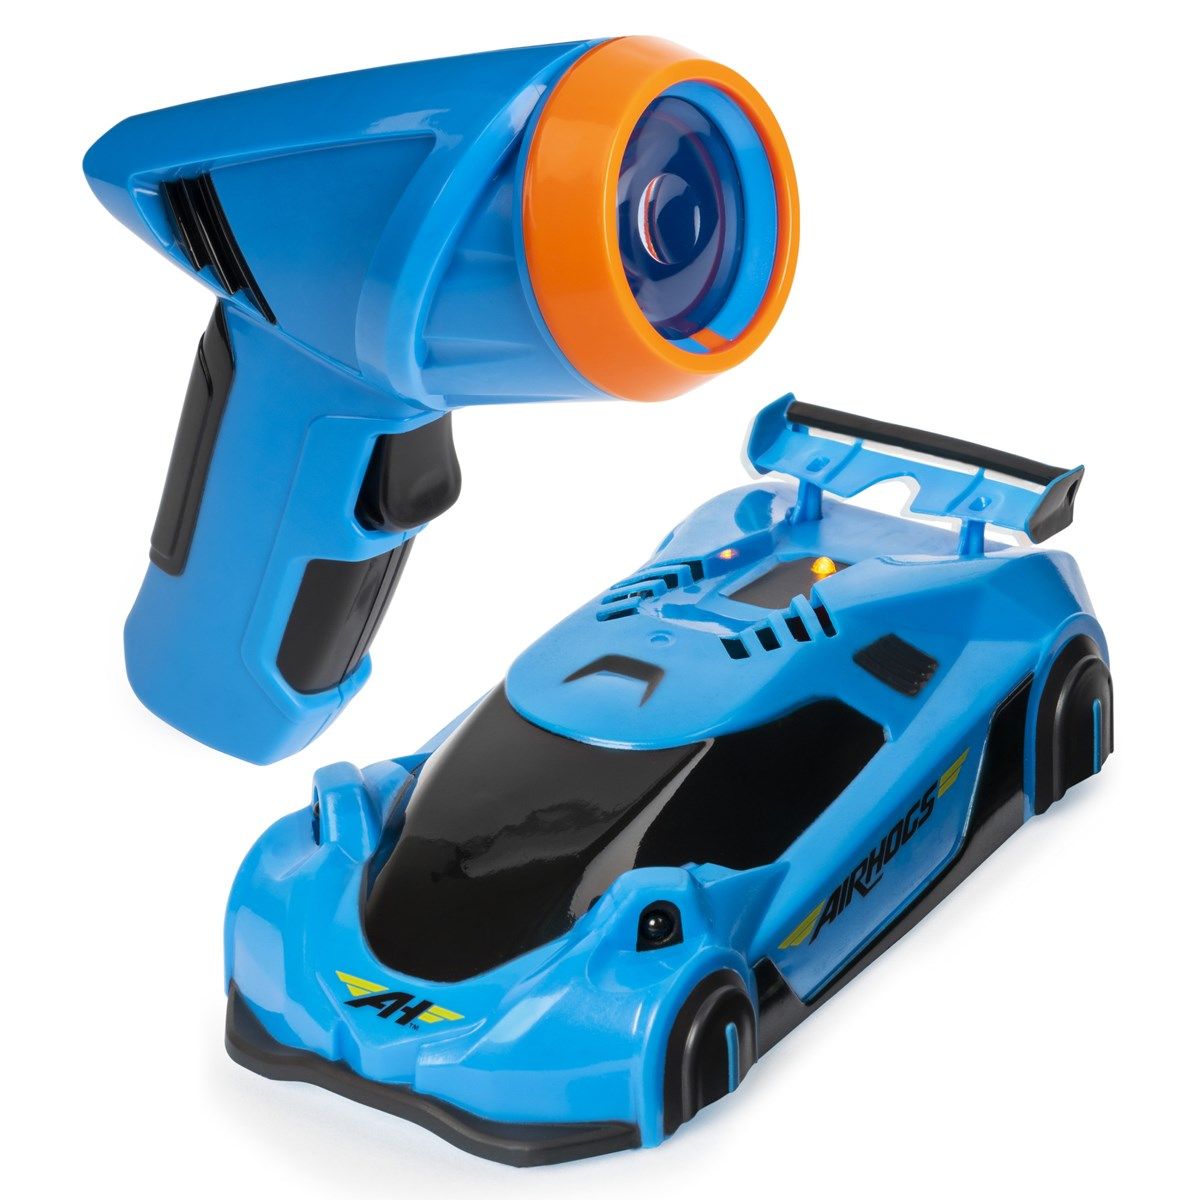 Air Hogs - Zero Gravity Laser Racer - Blue (6054529)